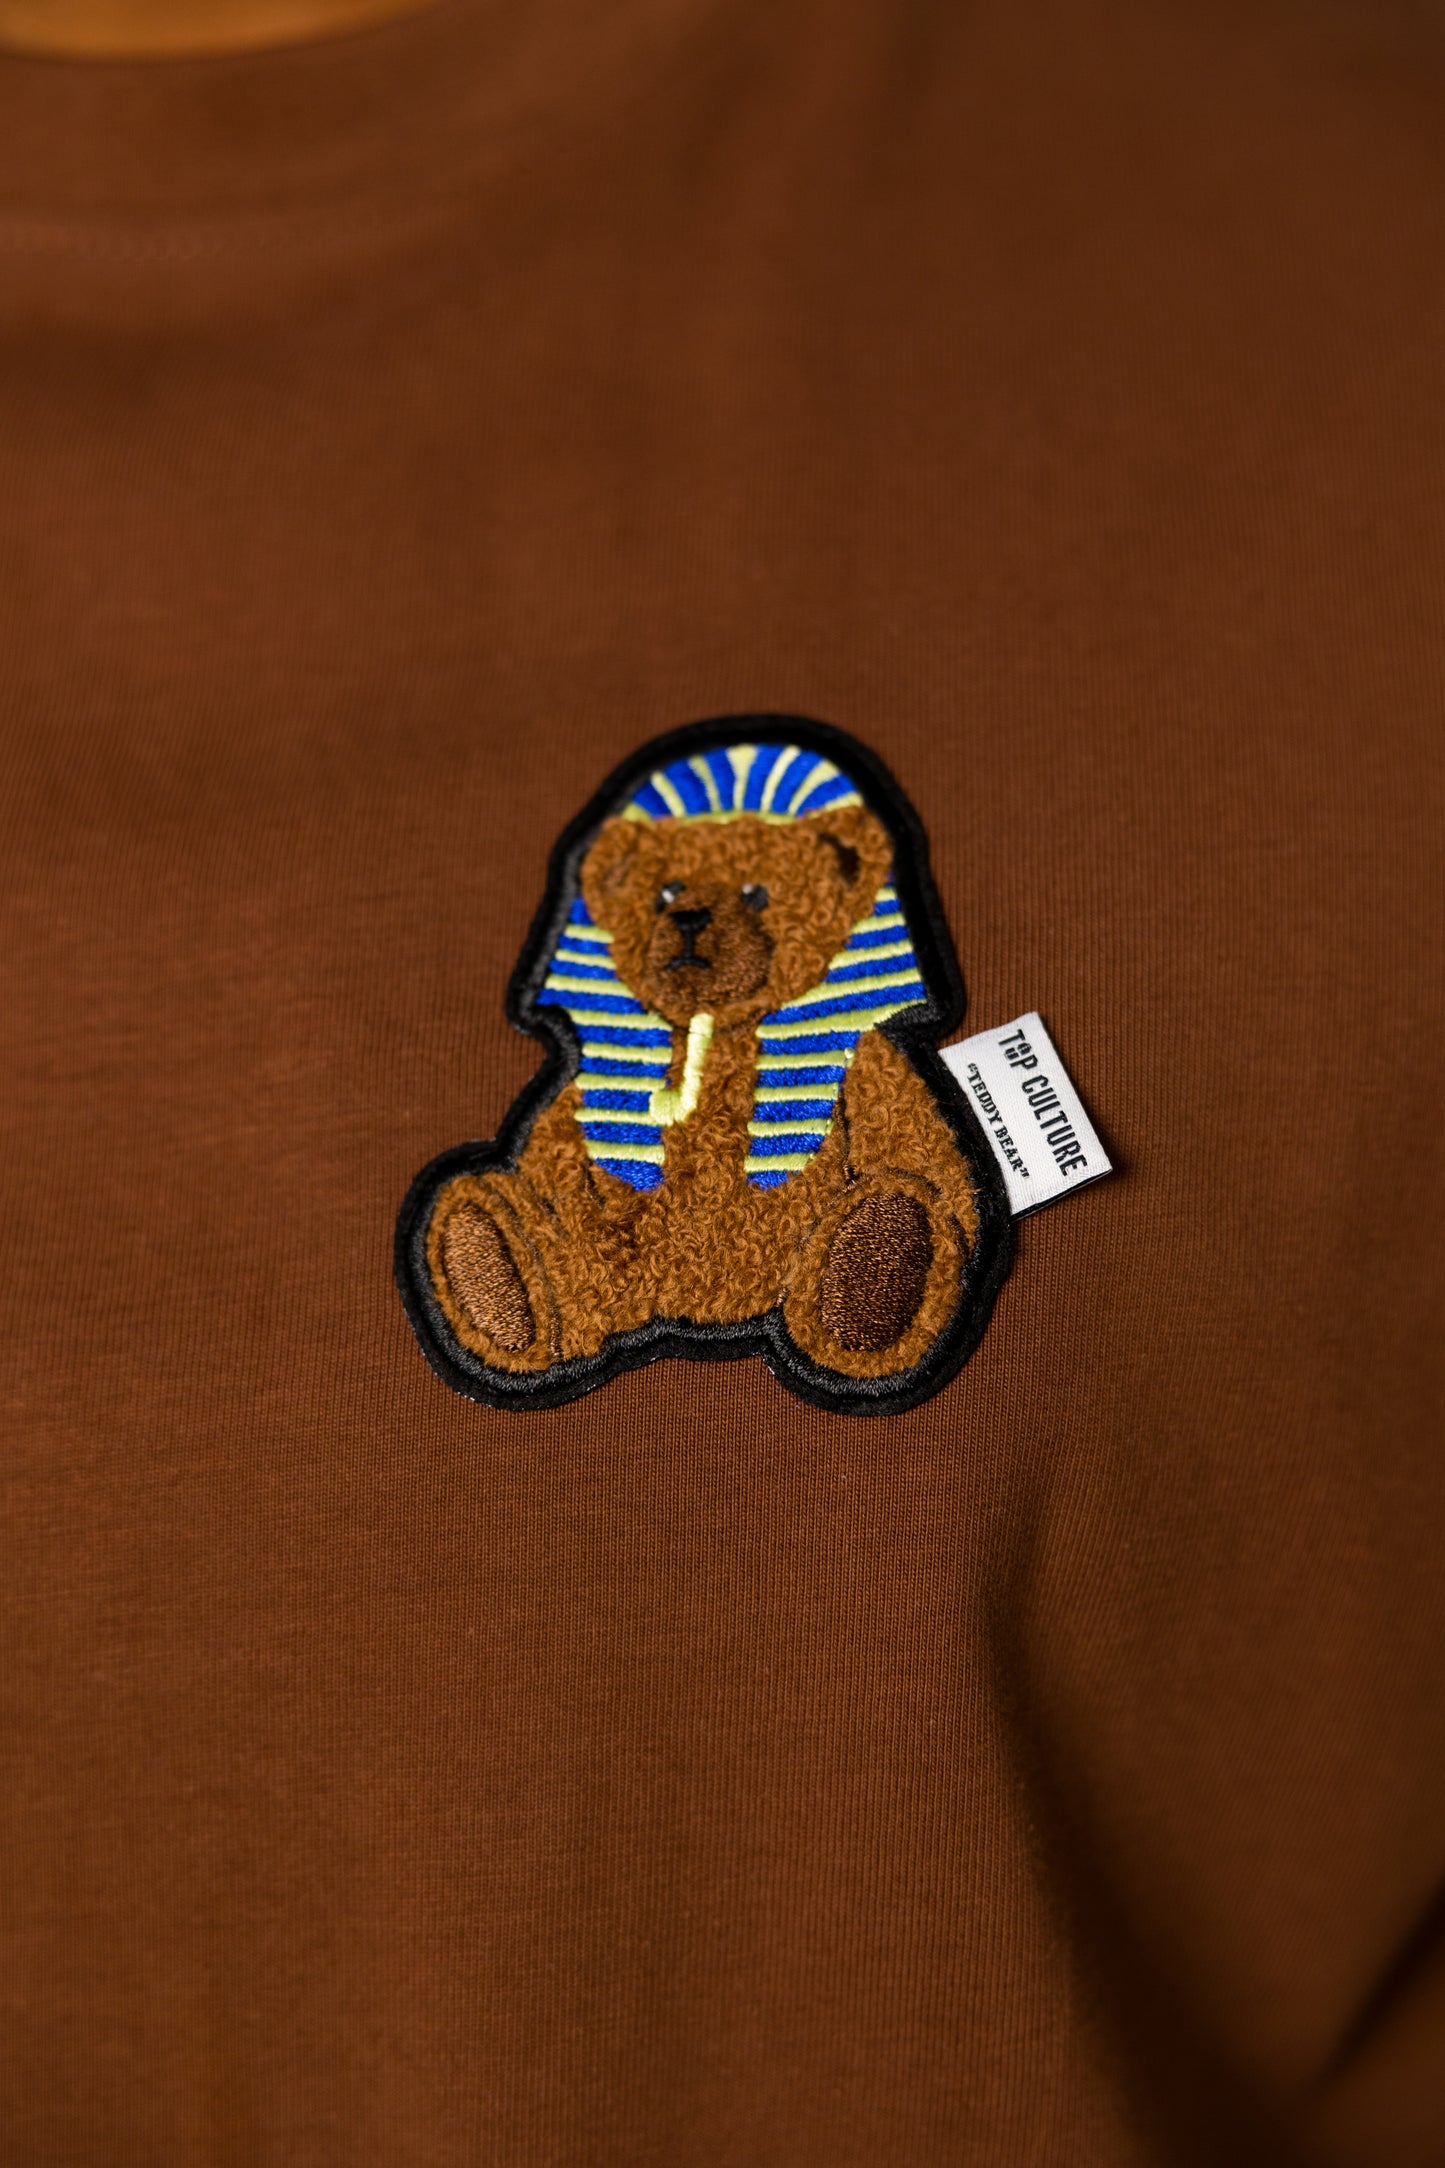 Dark brown fluffy bear Tut t-shirt